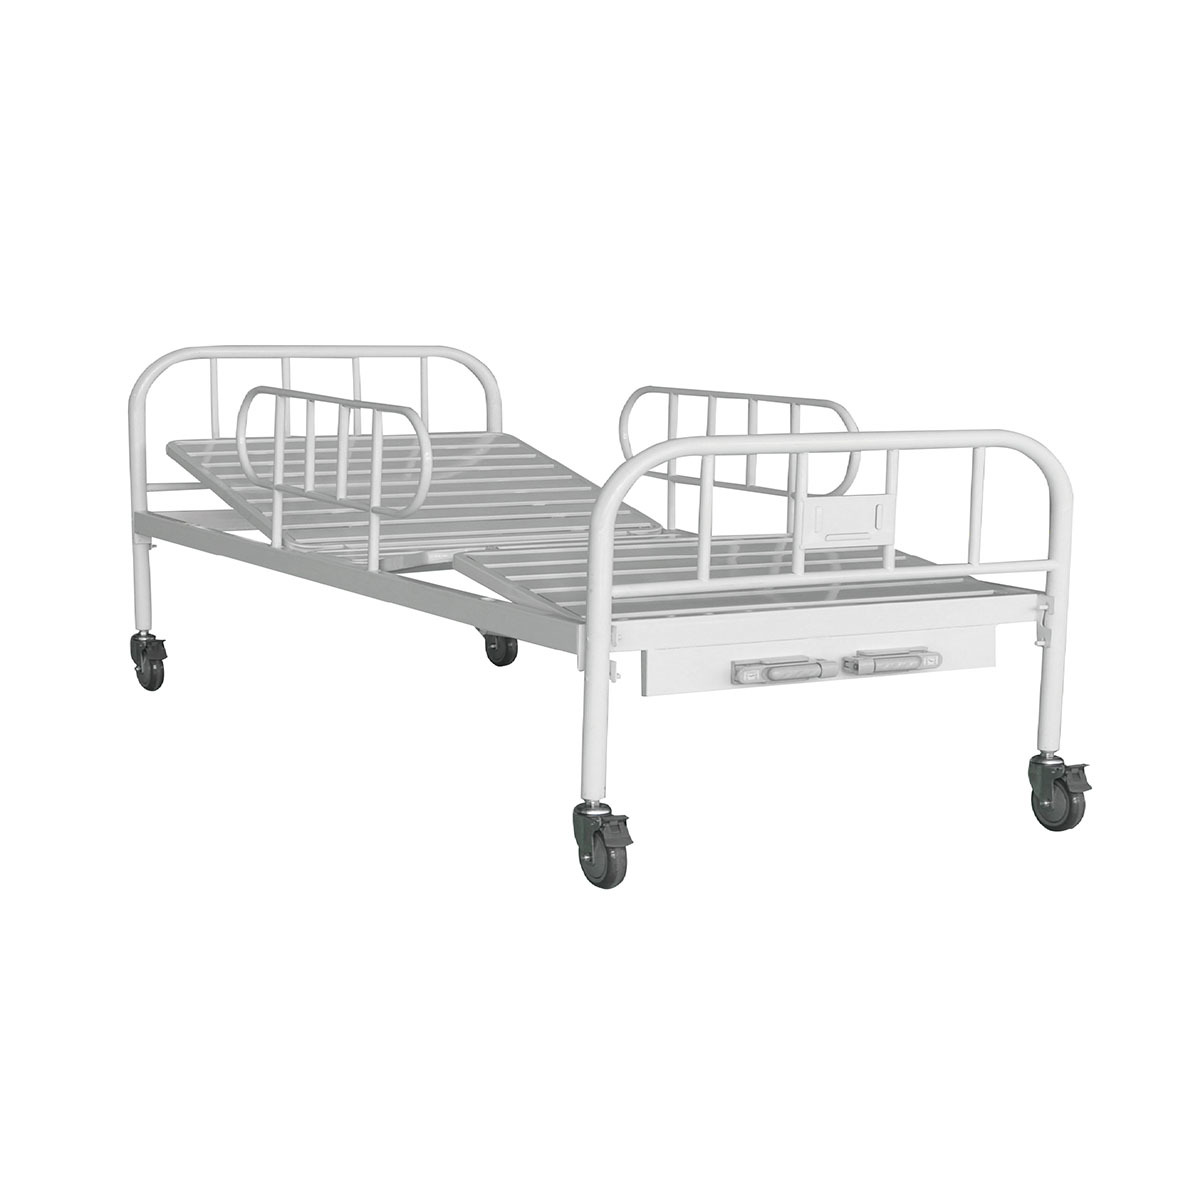 HL-A120C Manual  Hospital Bed